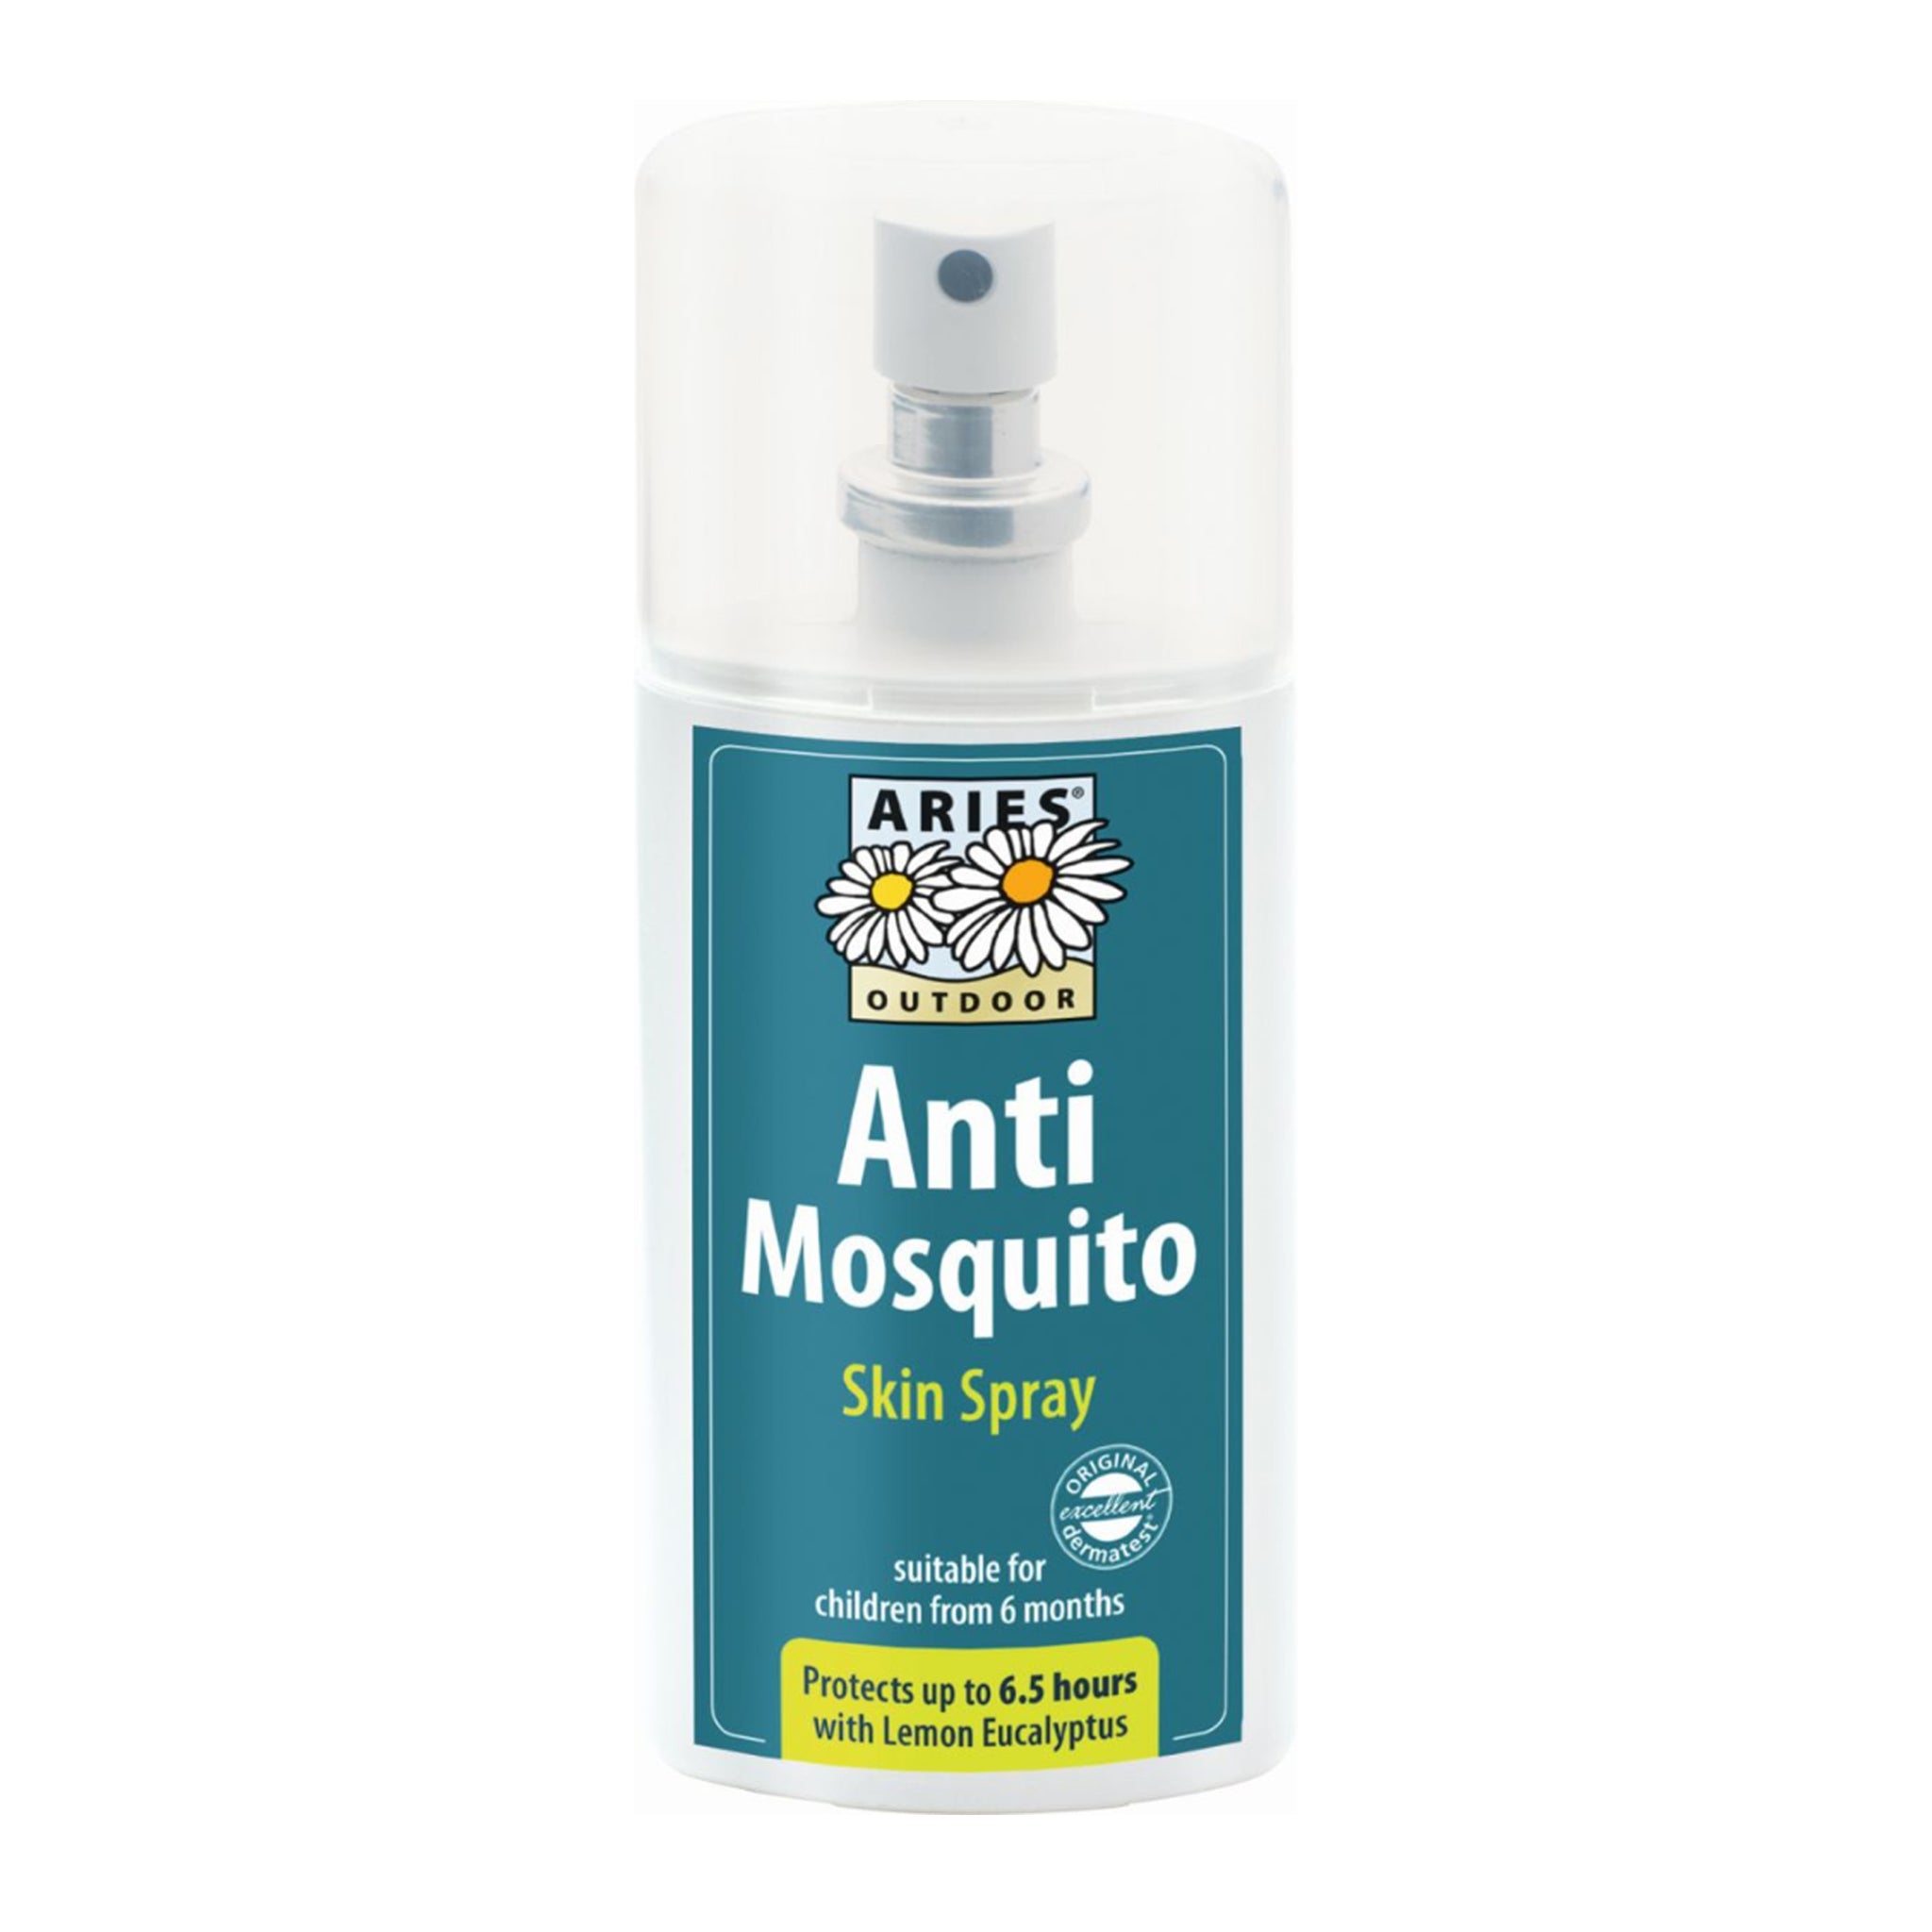 anti mosquito skin spray repelling spray works on ticks and midges too